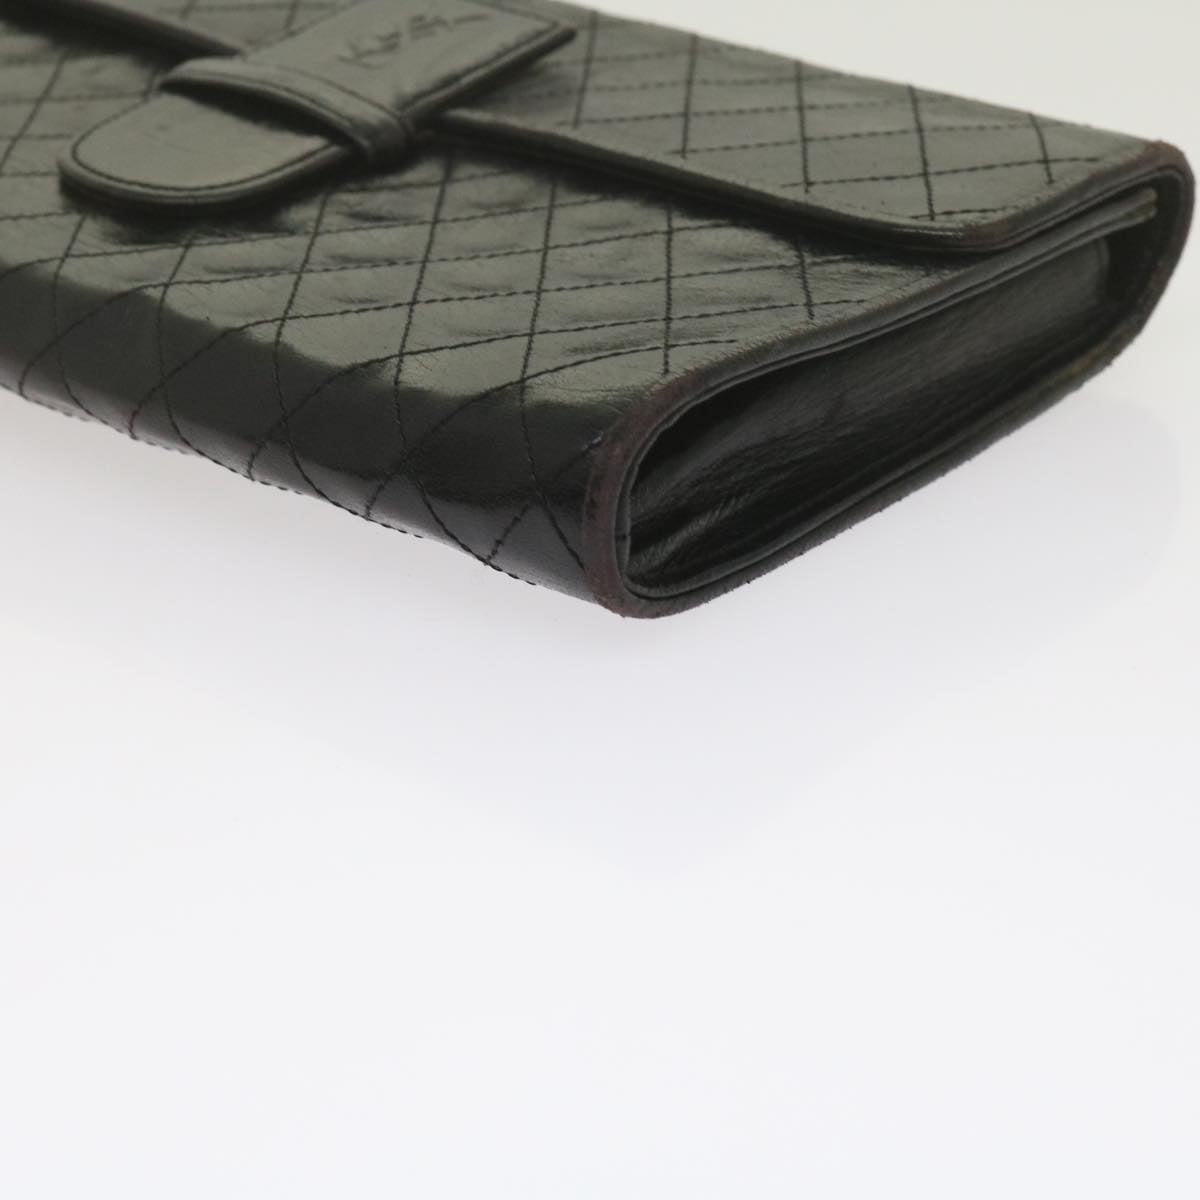 SAINT LAURENT Quilted Clutch Bag Leather Black Auth yk9976